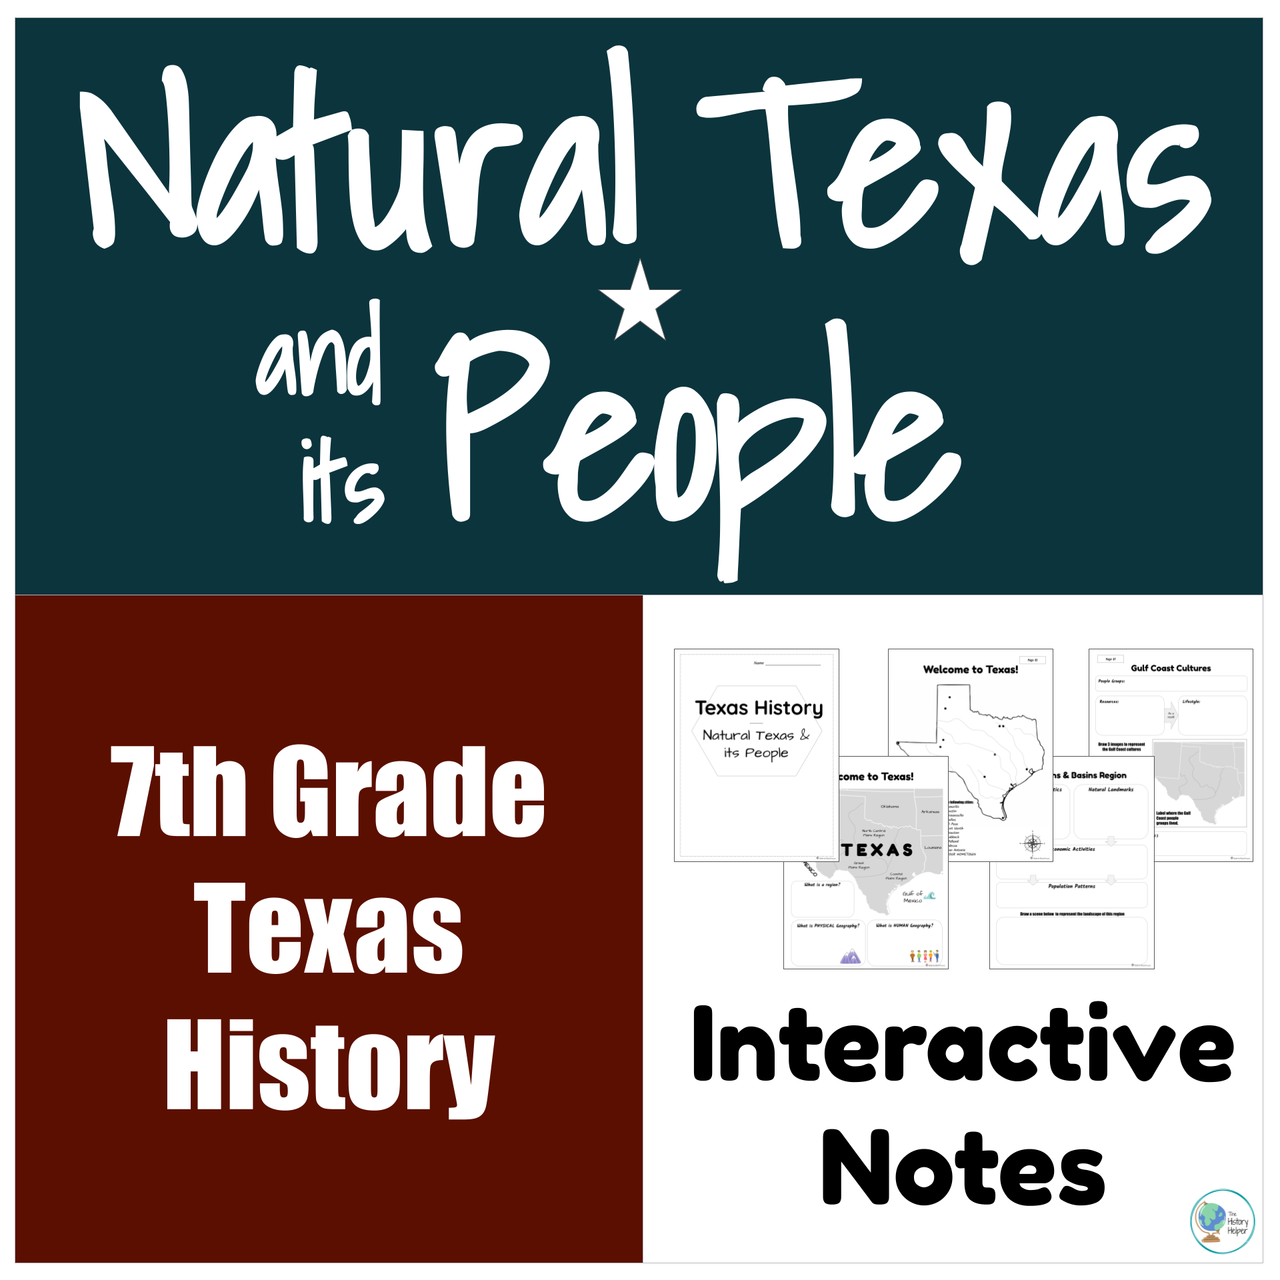 Natural Texas & its People | TX Regions | Interactive Notes | TX History 7th Grade